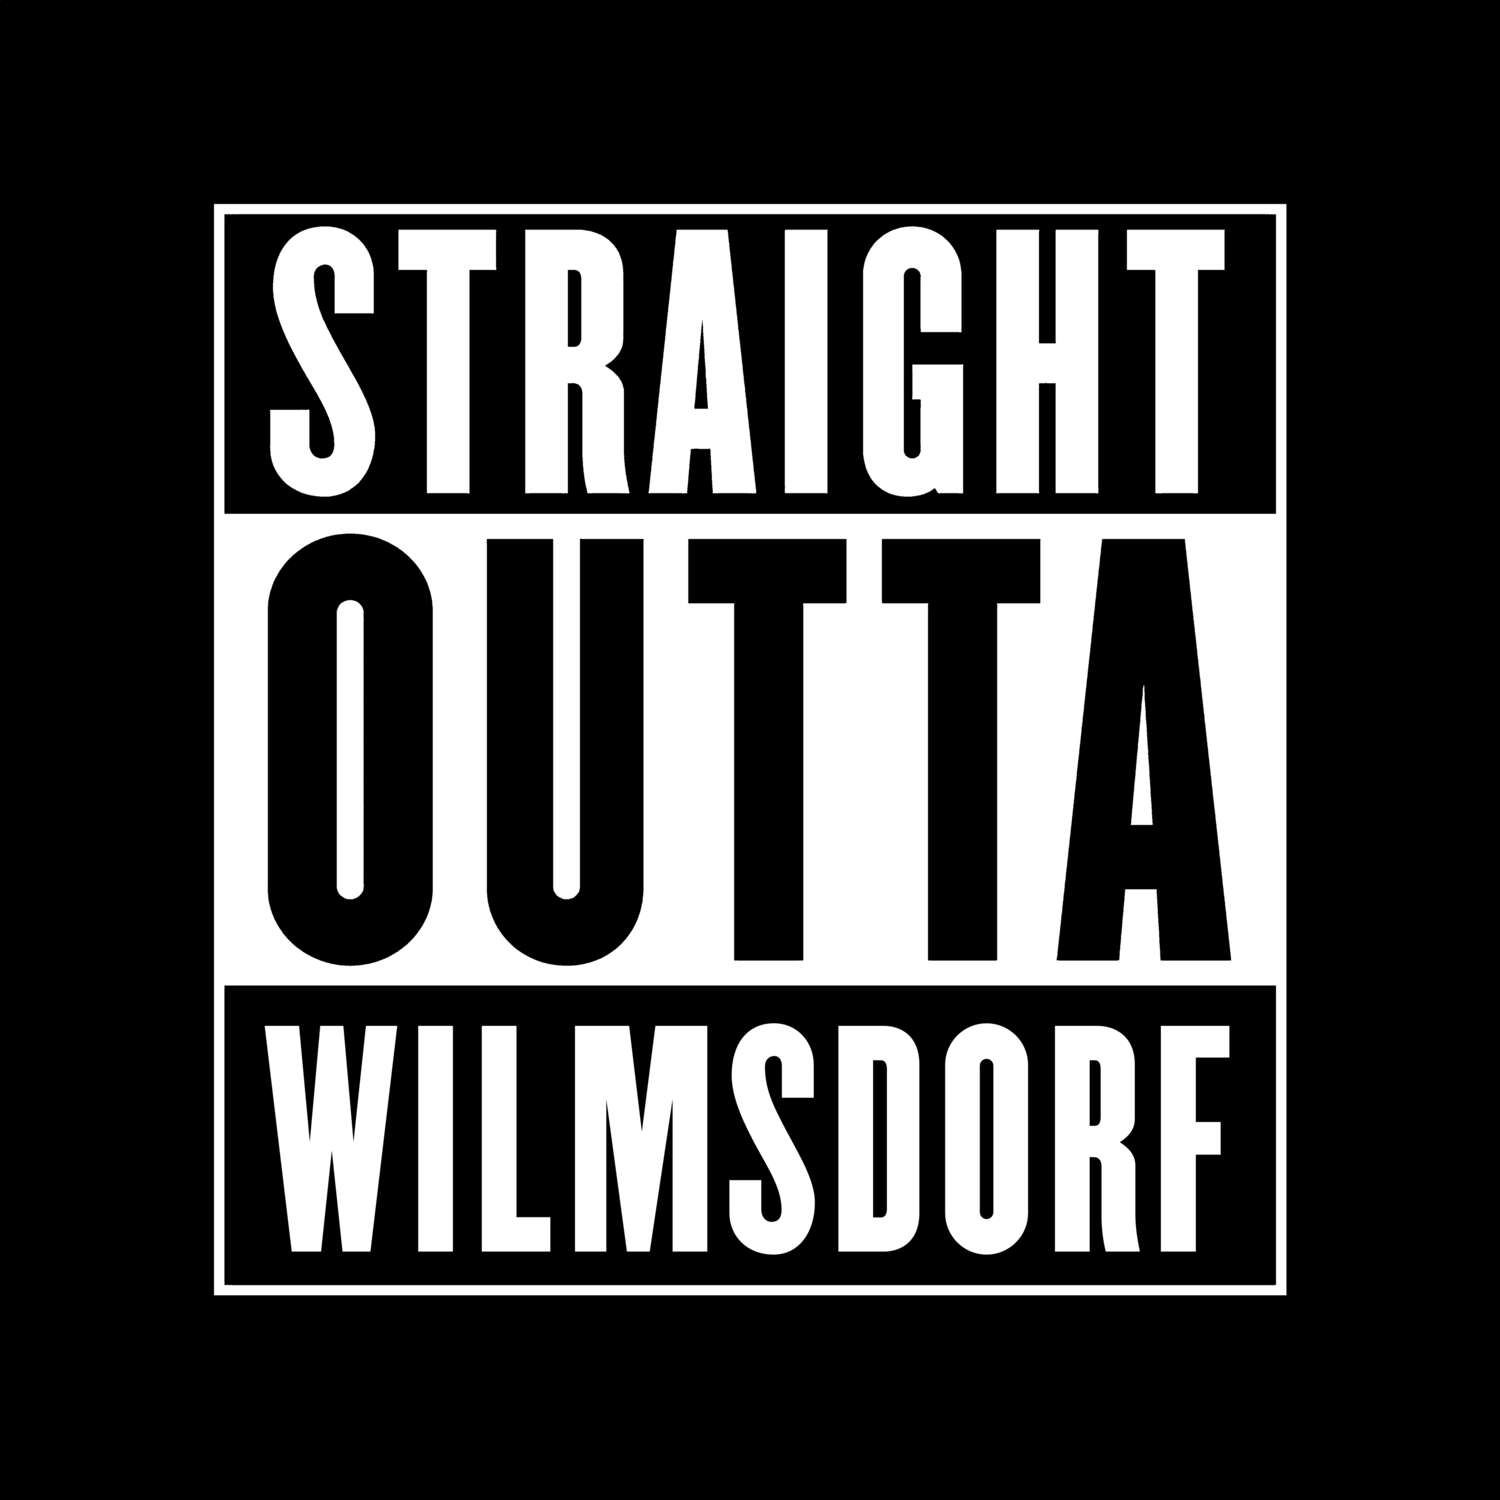 Wilmsdorf T-Shirt »Straight Outta«